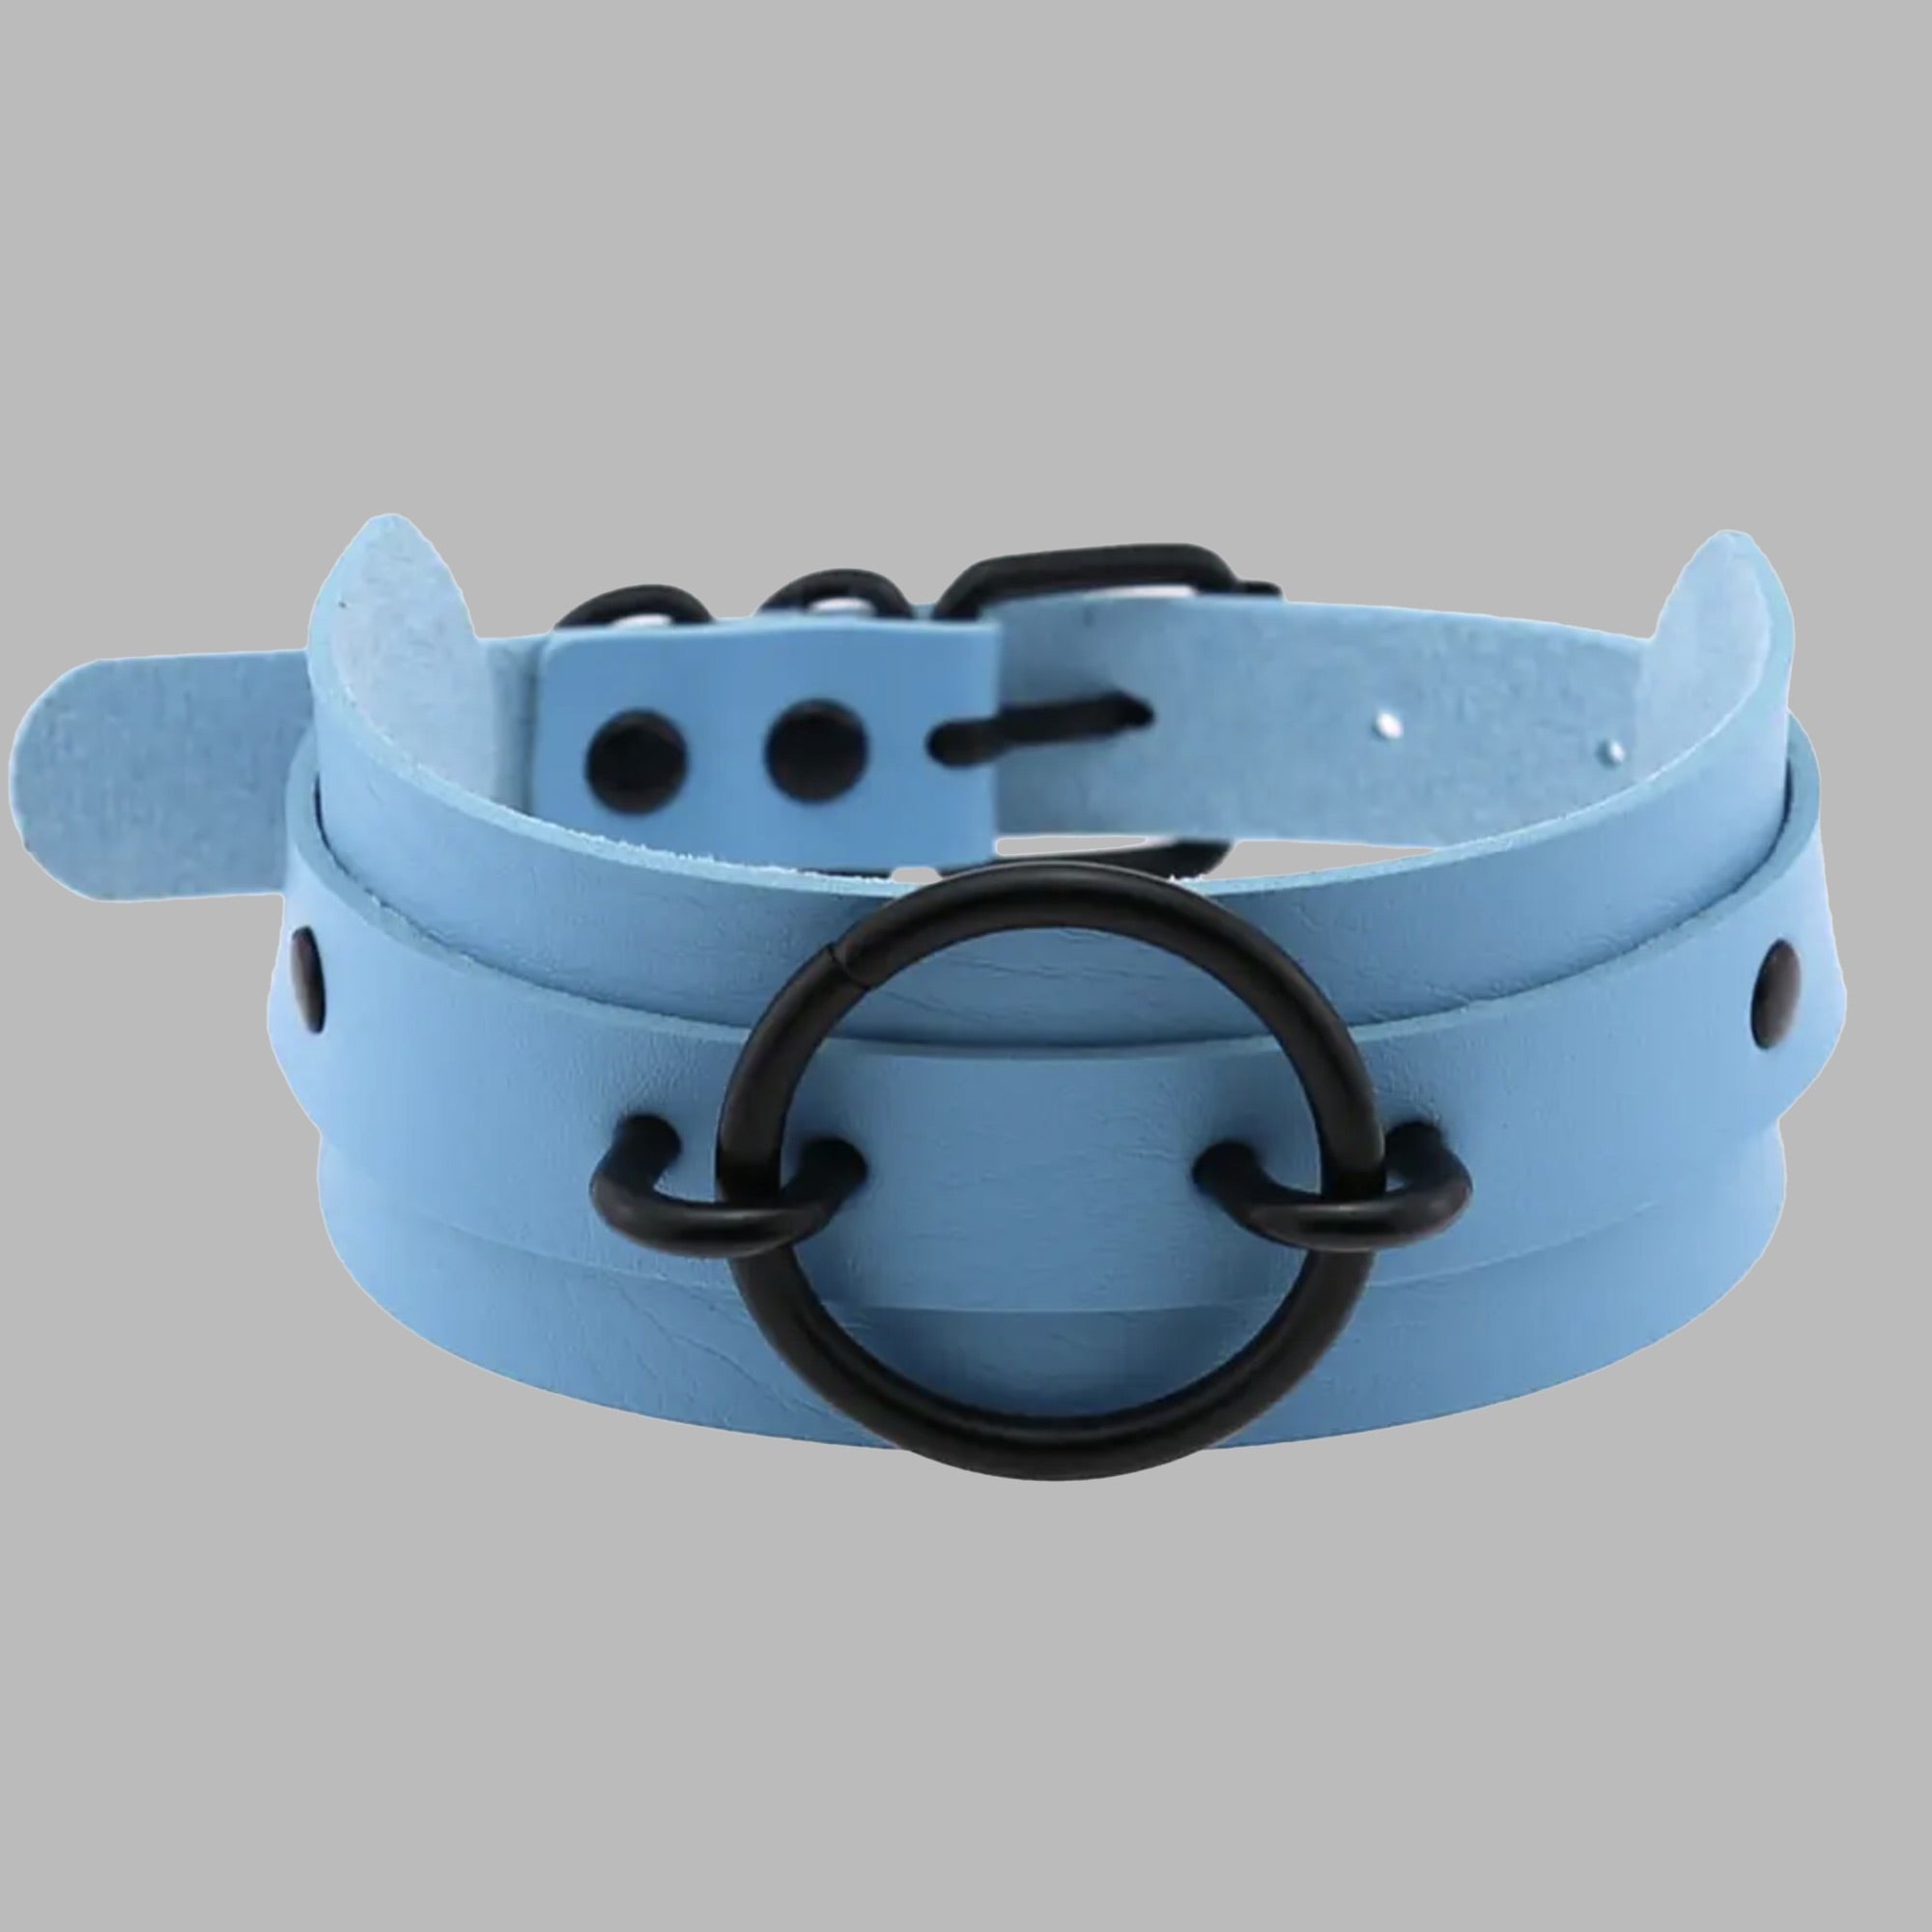 Fixed O Ring Choker Collar - Baby Blue & Black